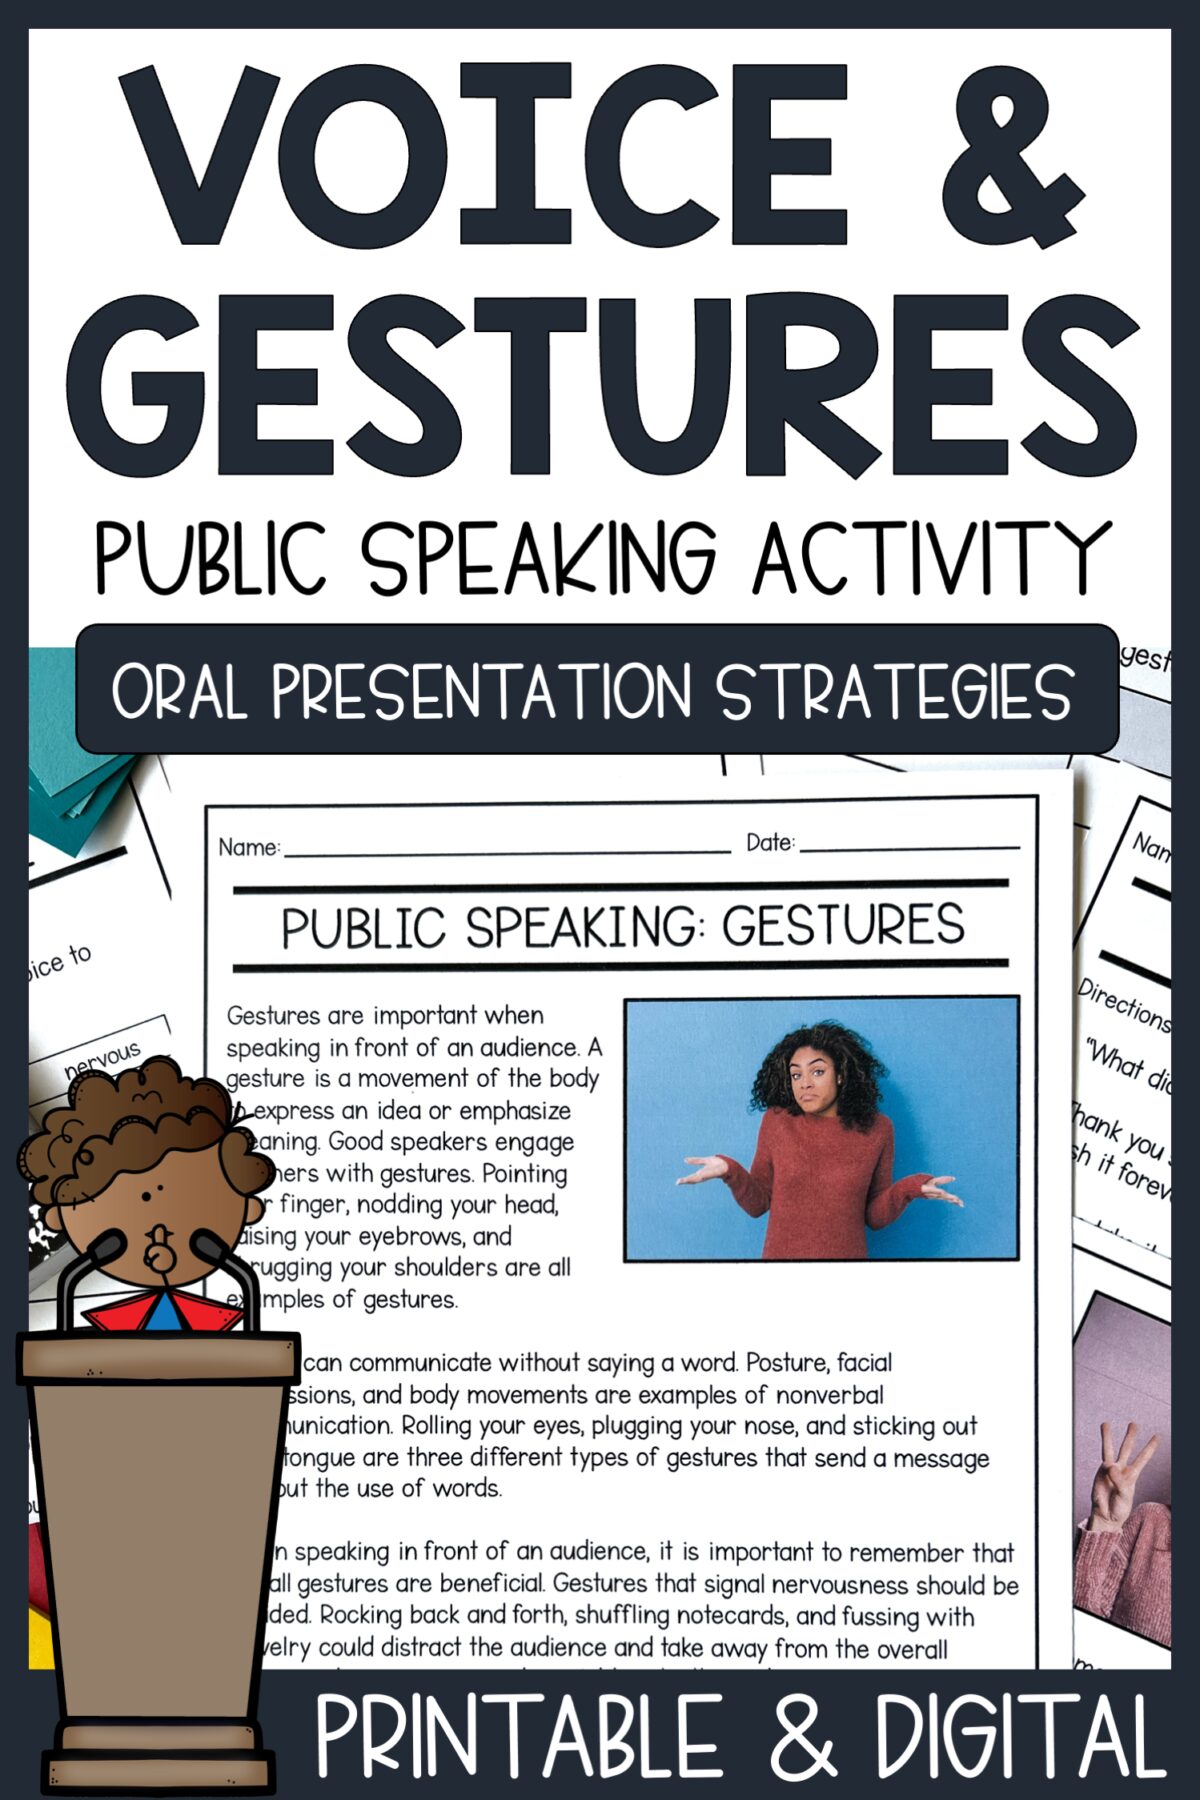 Public Speaking Activity for Gestures